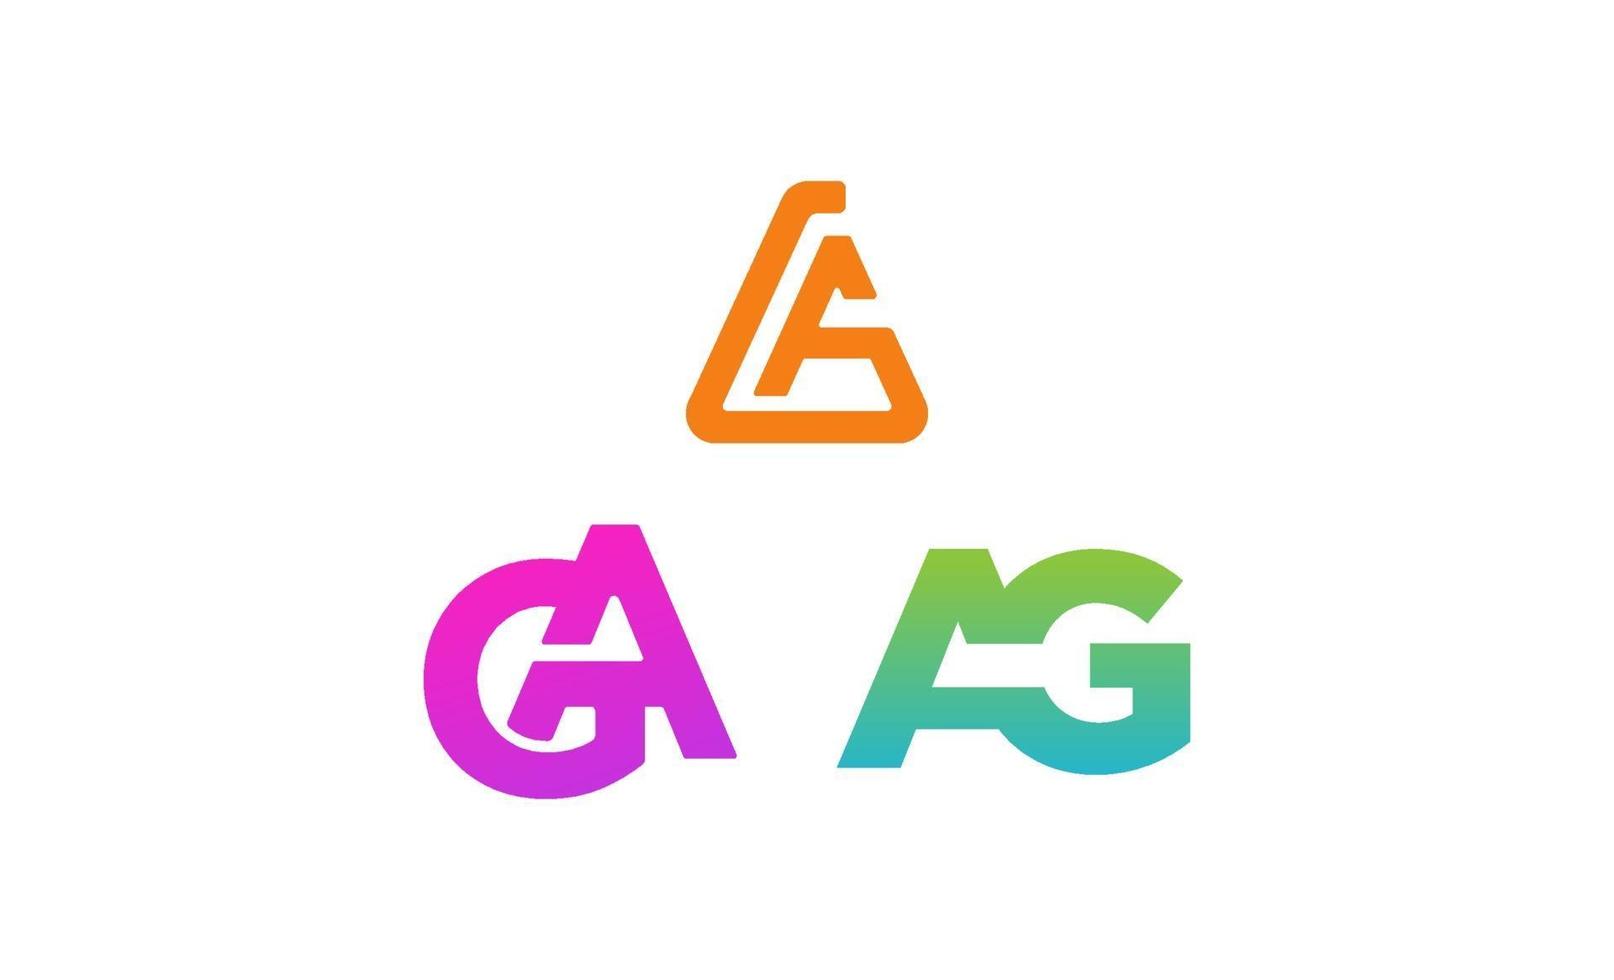 Initial AG or GA logo template vector design illustration